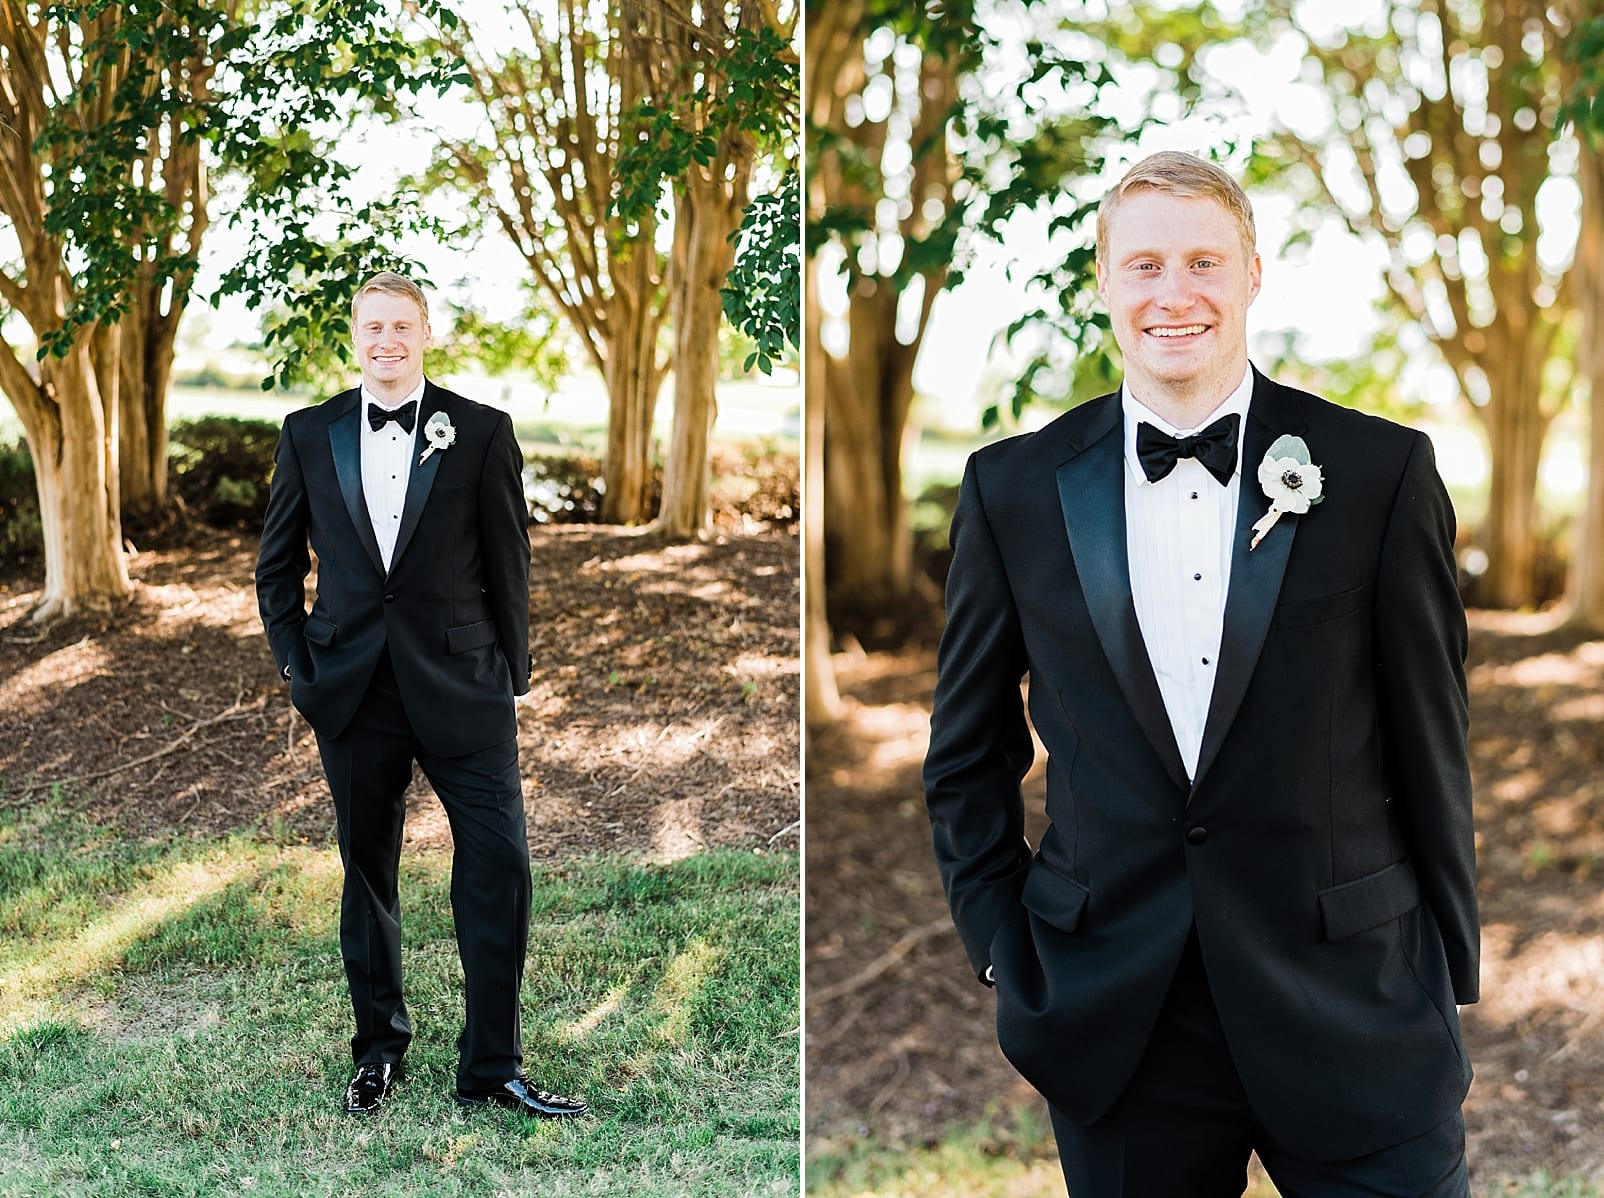 kingsmill resort wedding photographer grooms suit inspiration black tux with bowtie photo